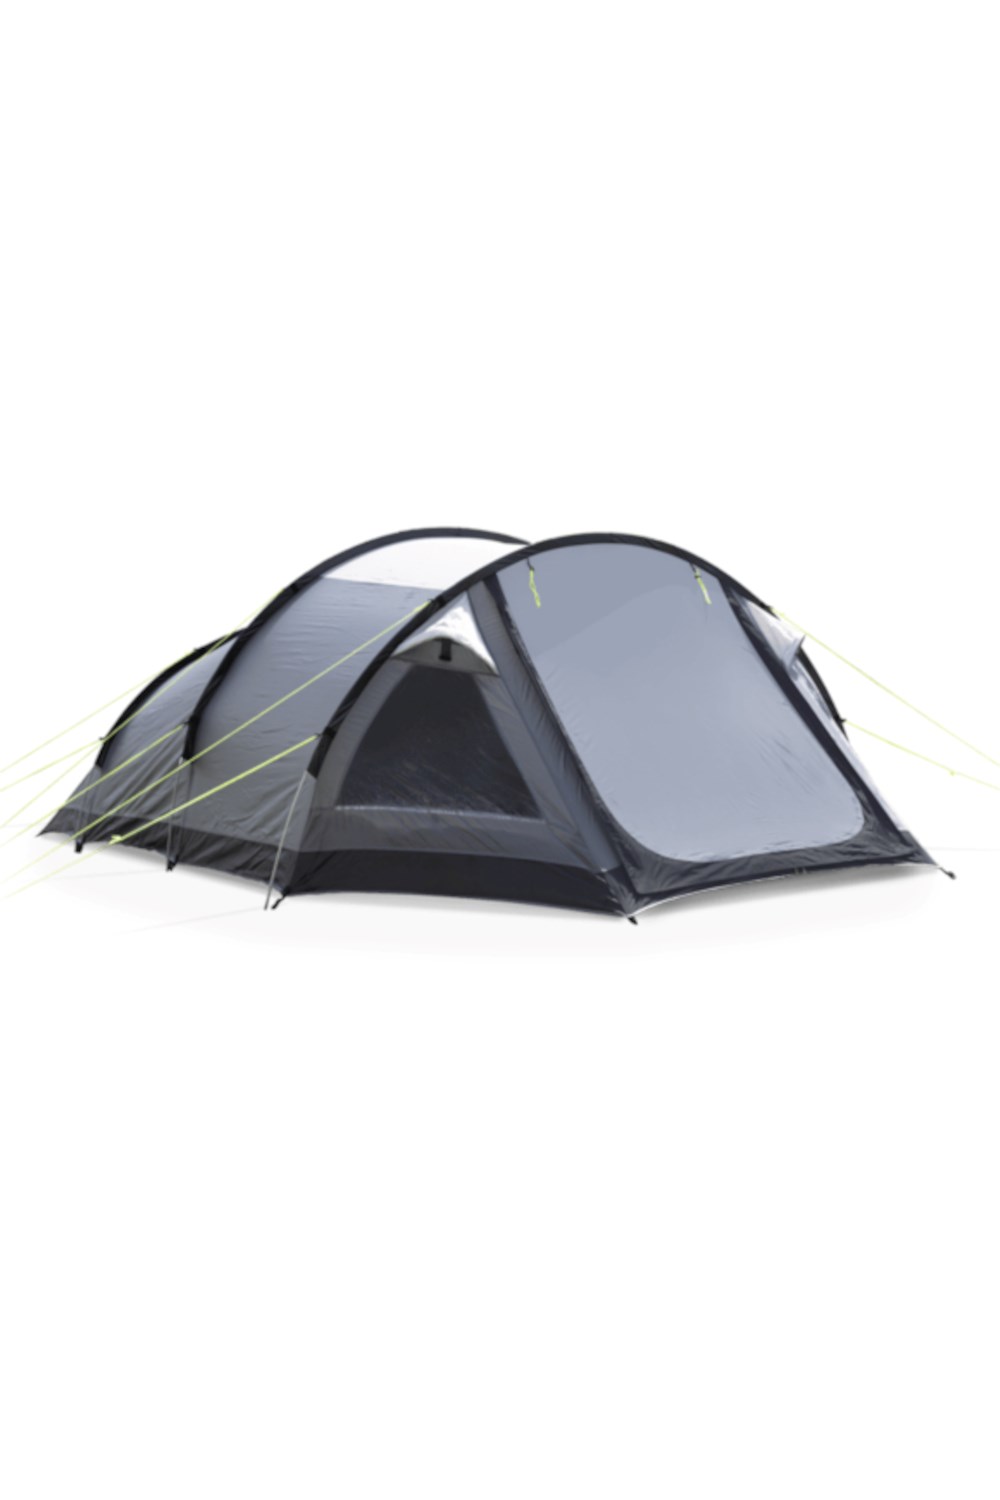 Mersea 3 Man Poled Camping Tent -